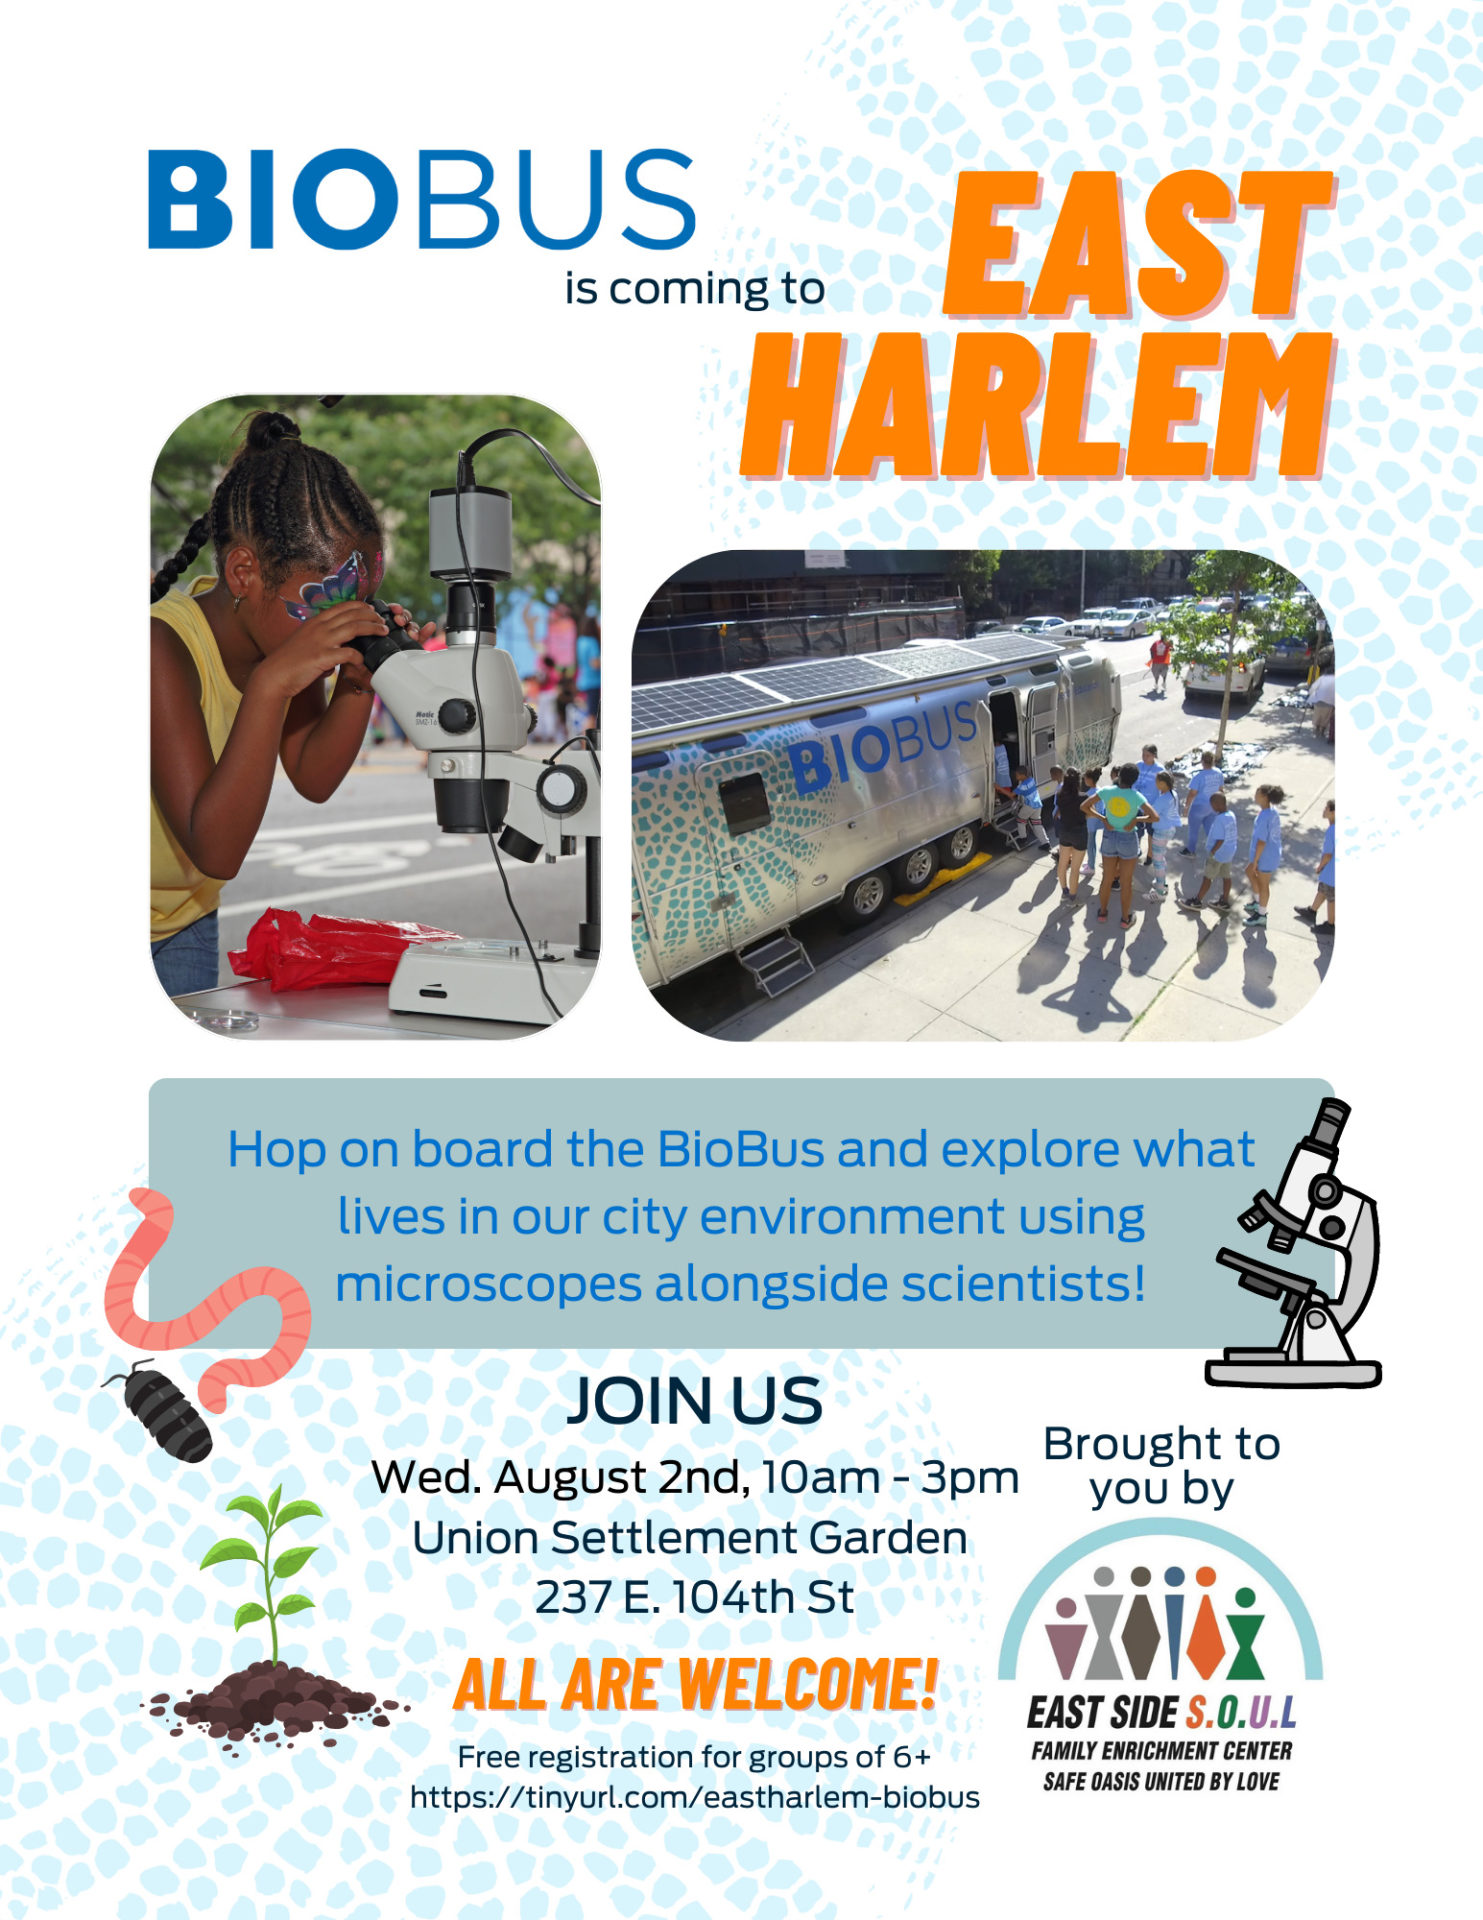 BioBus Visits Union Settlement Garden in East Harlem!